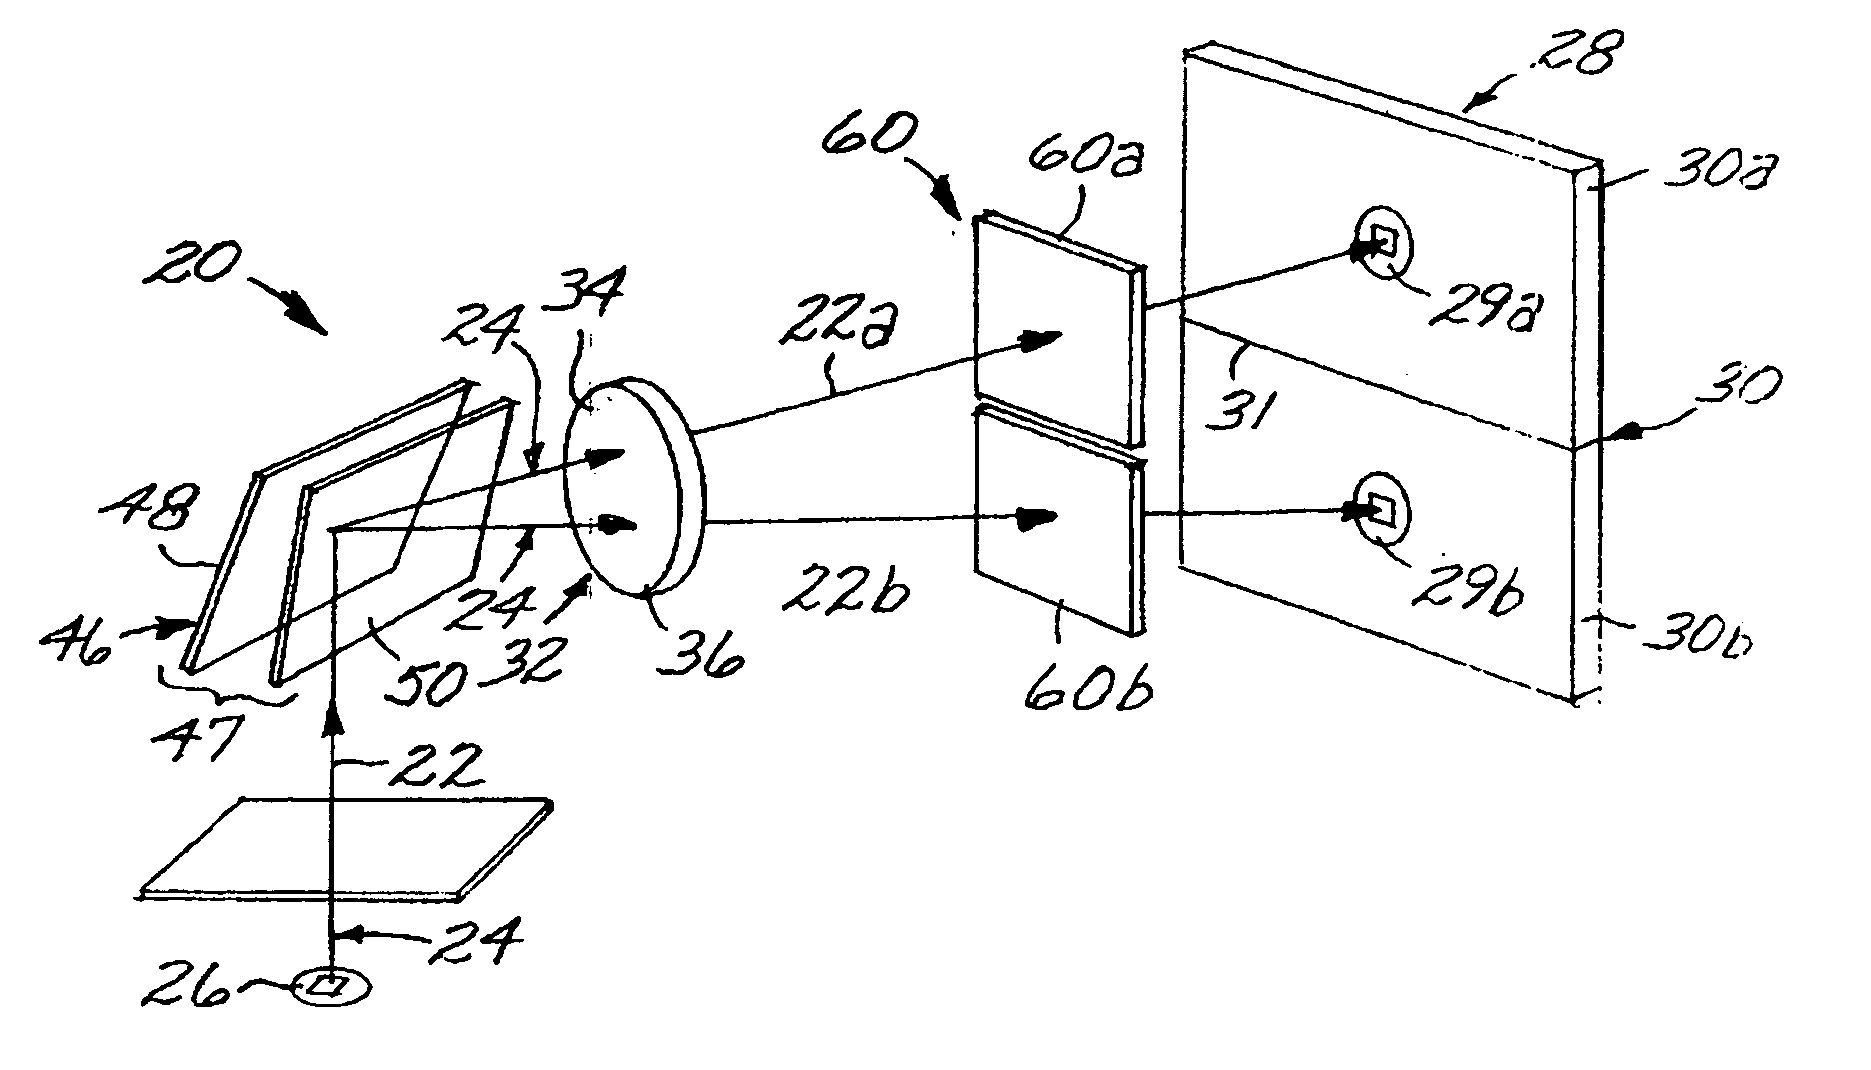 Dual-band sensor system utilizing a wavelength-selective beamsplitter